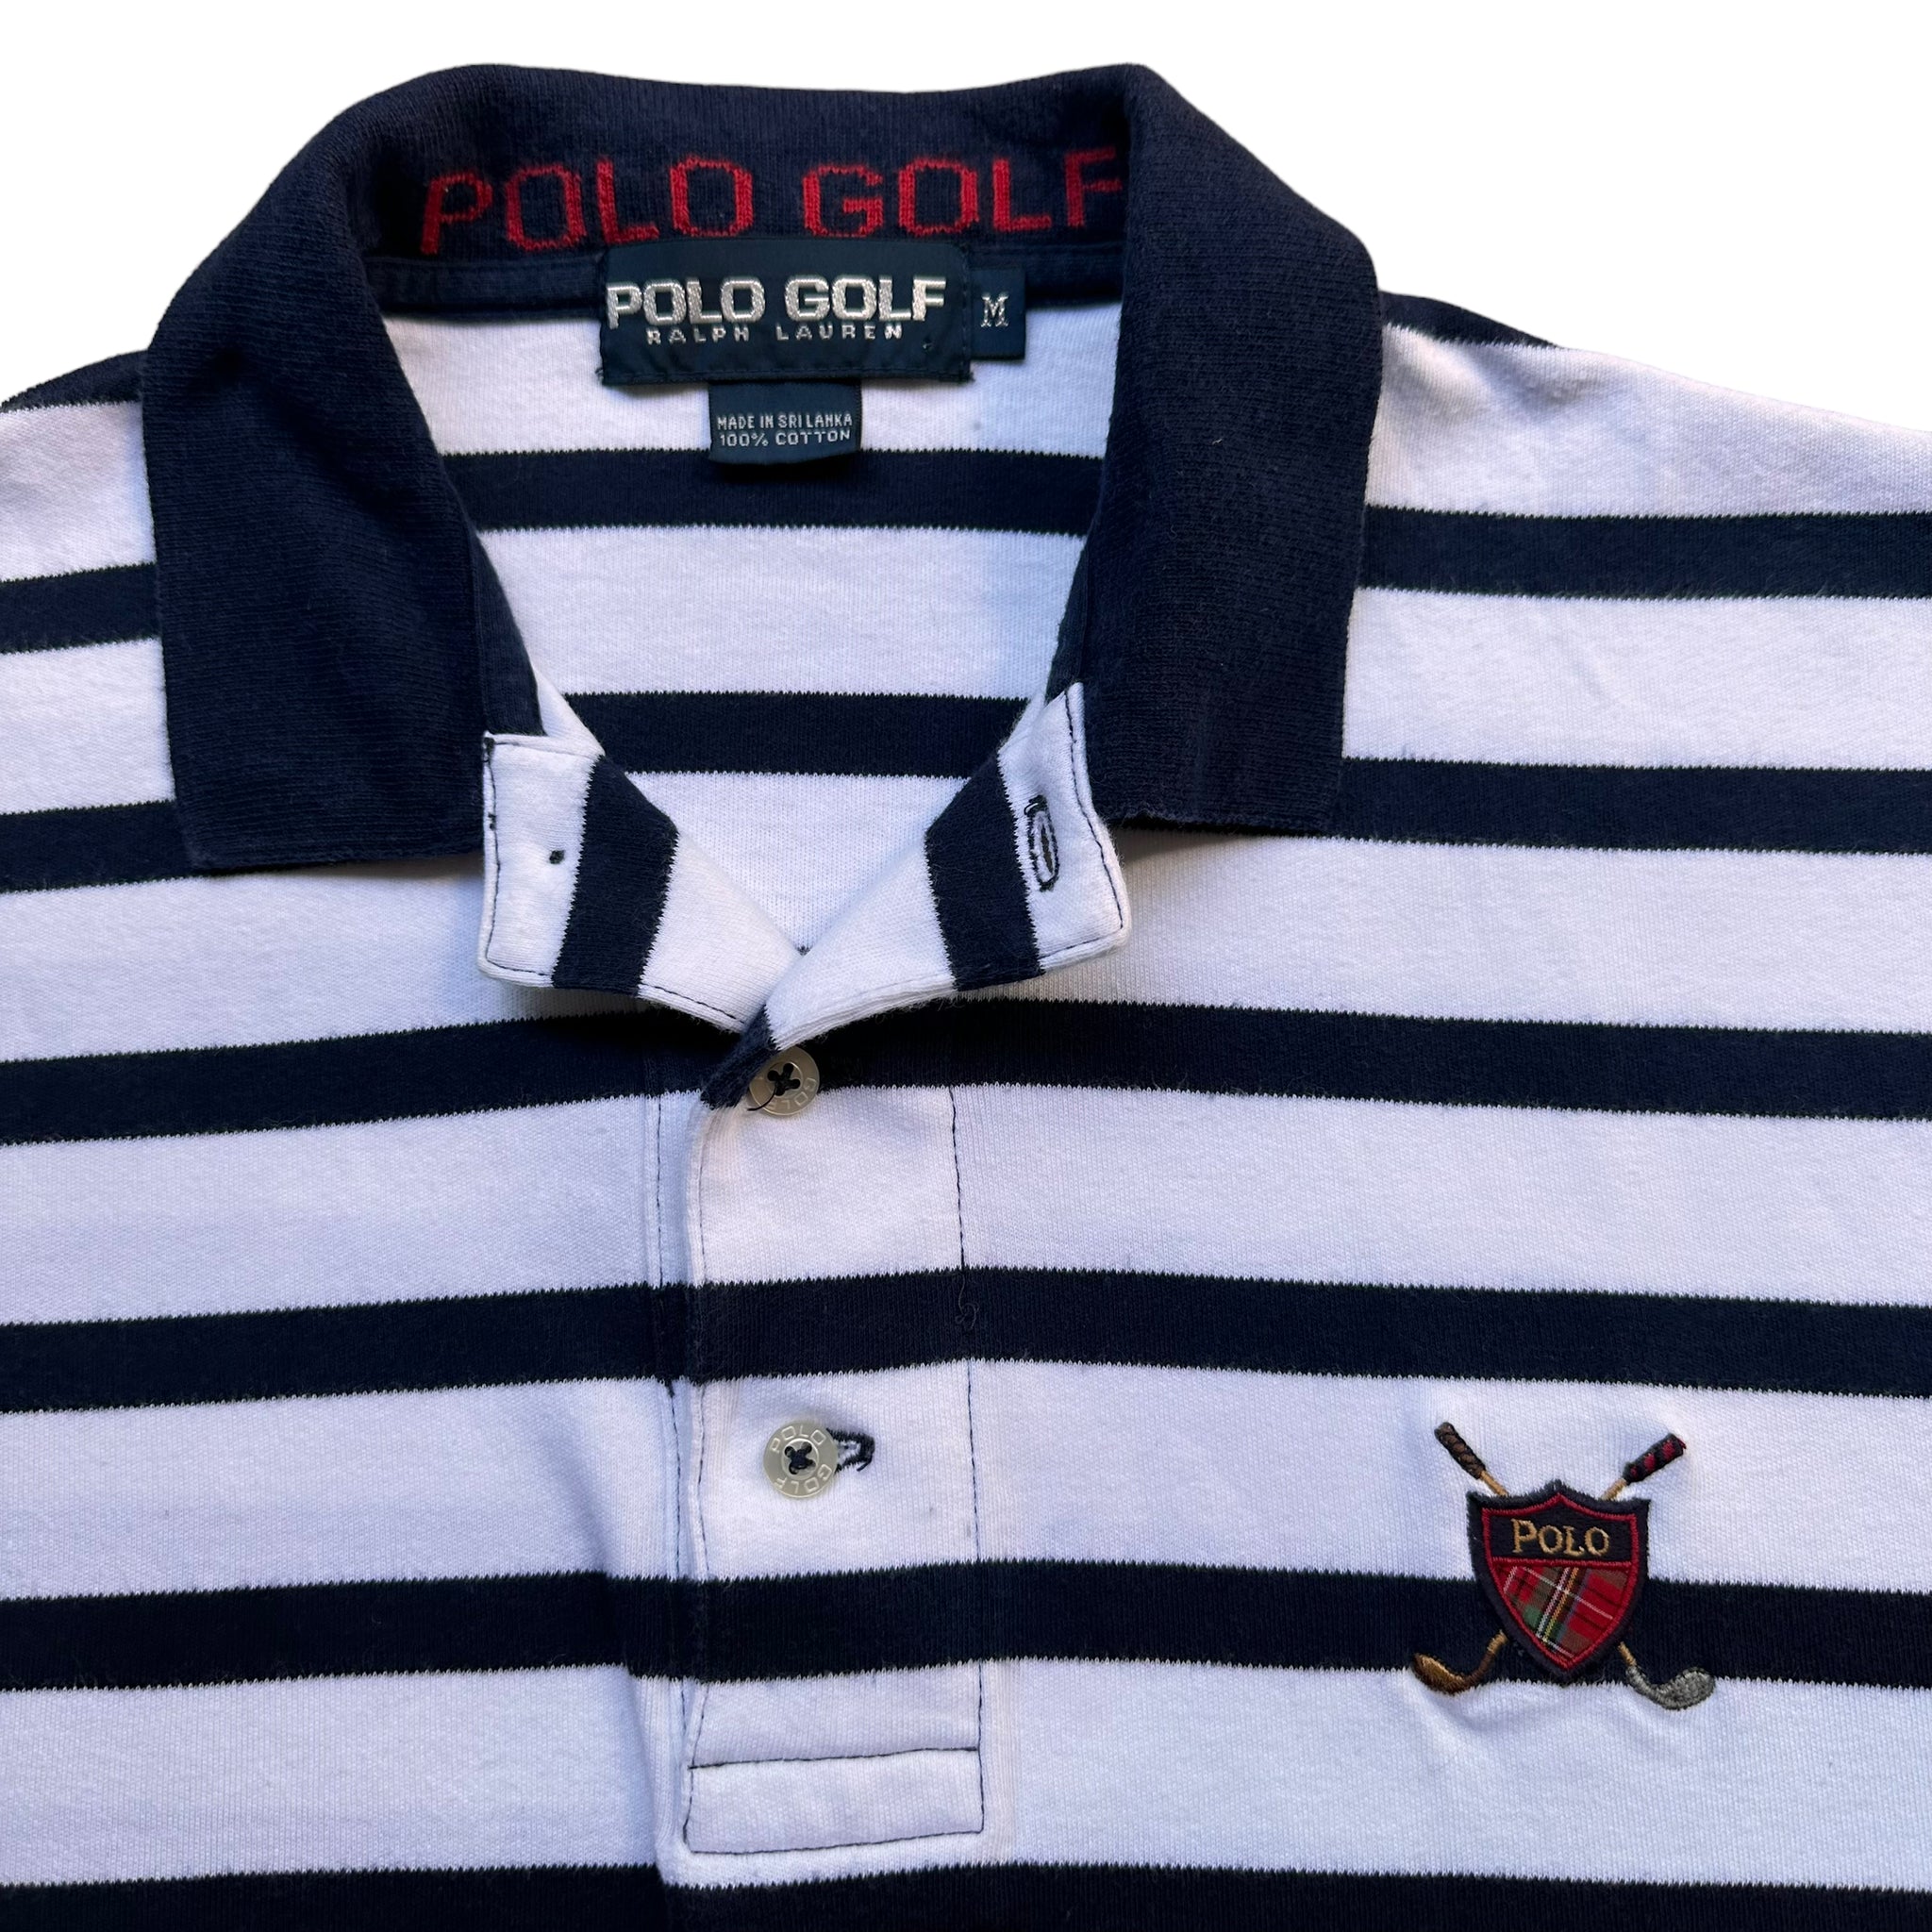 Polo golf shirt medium